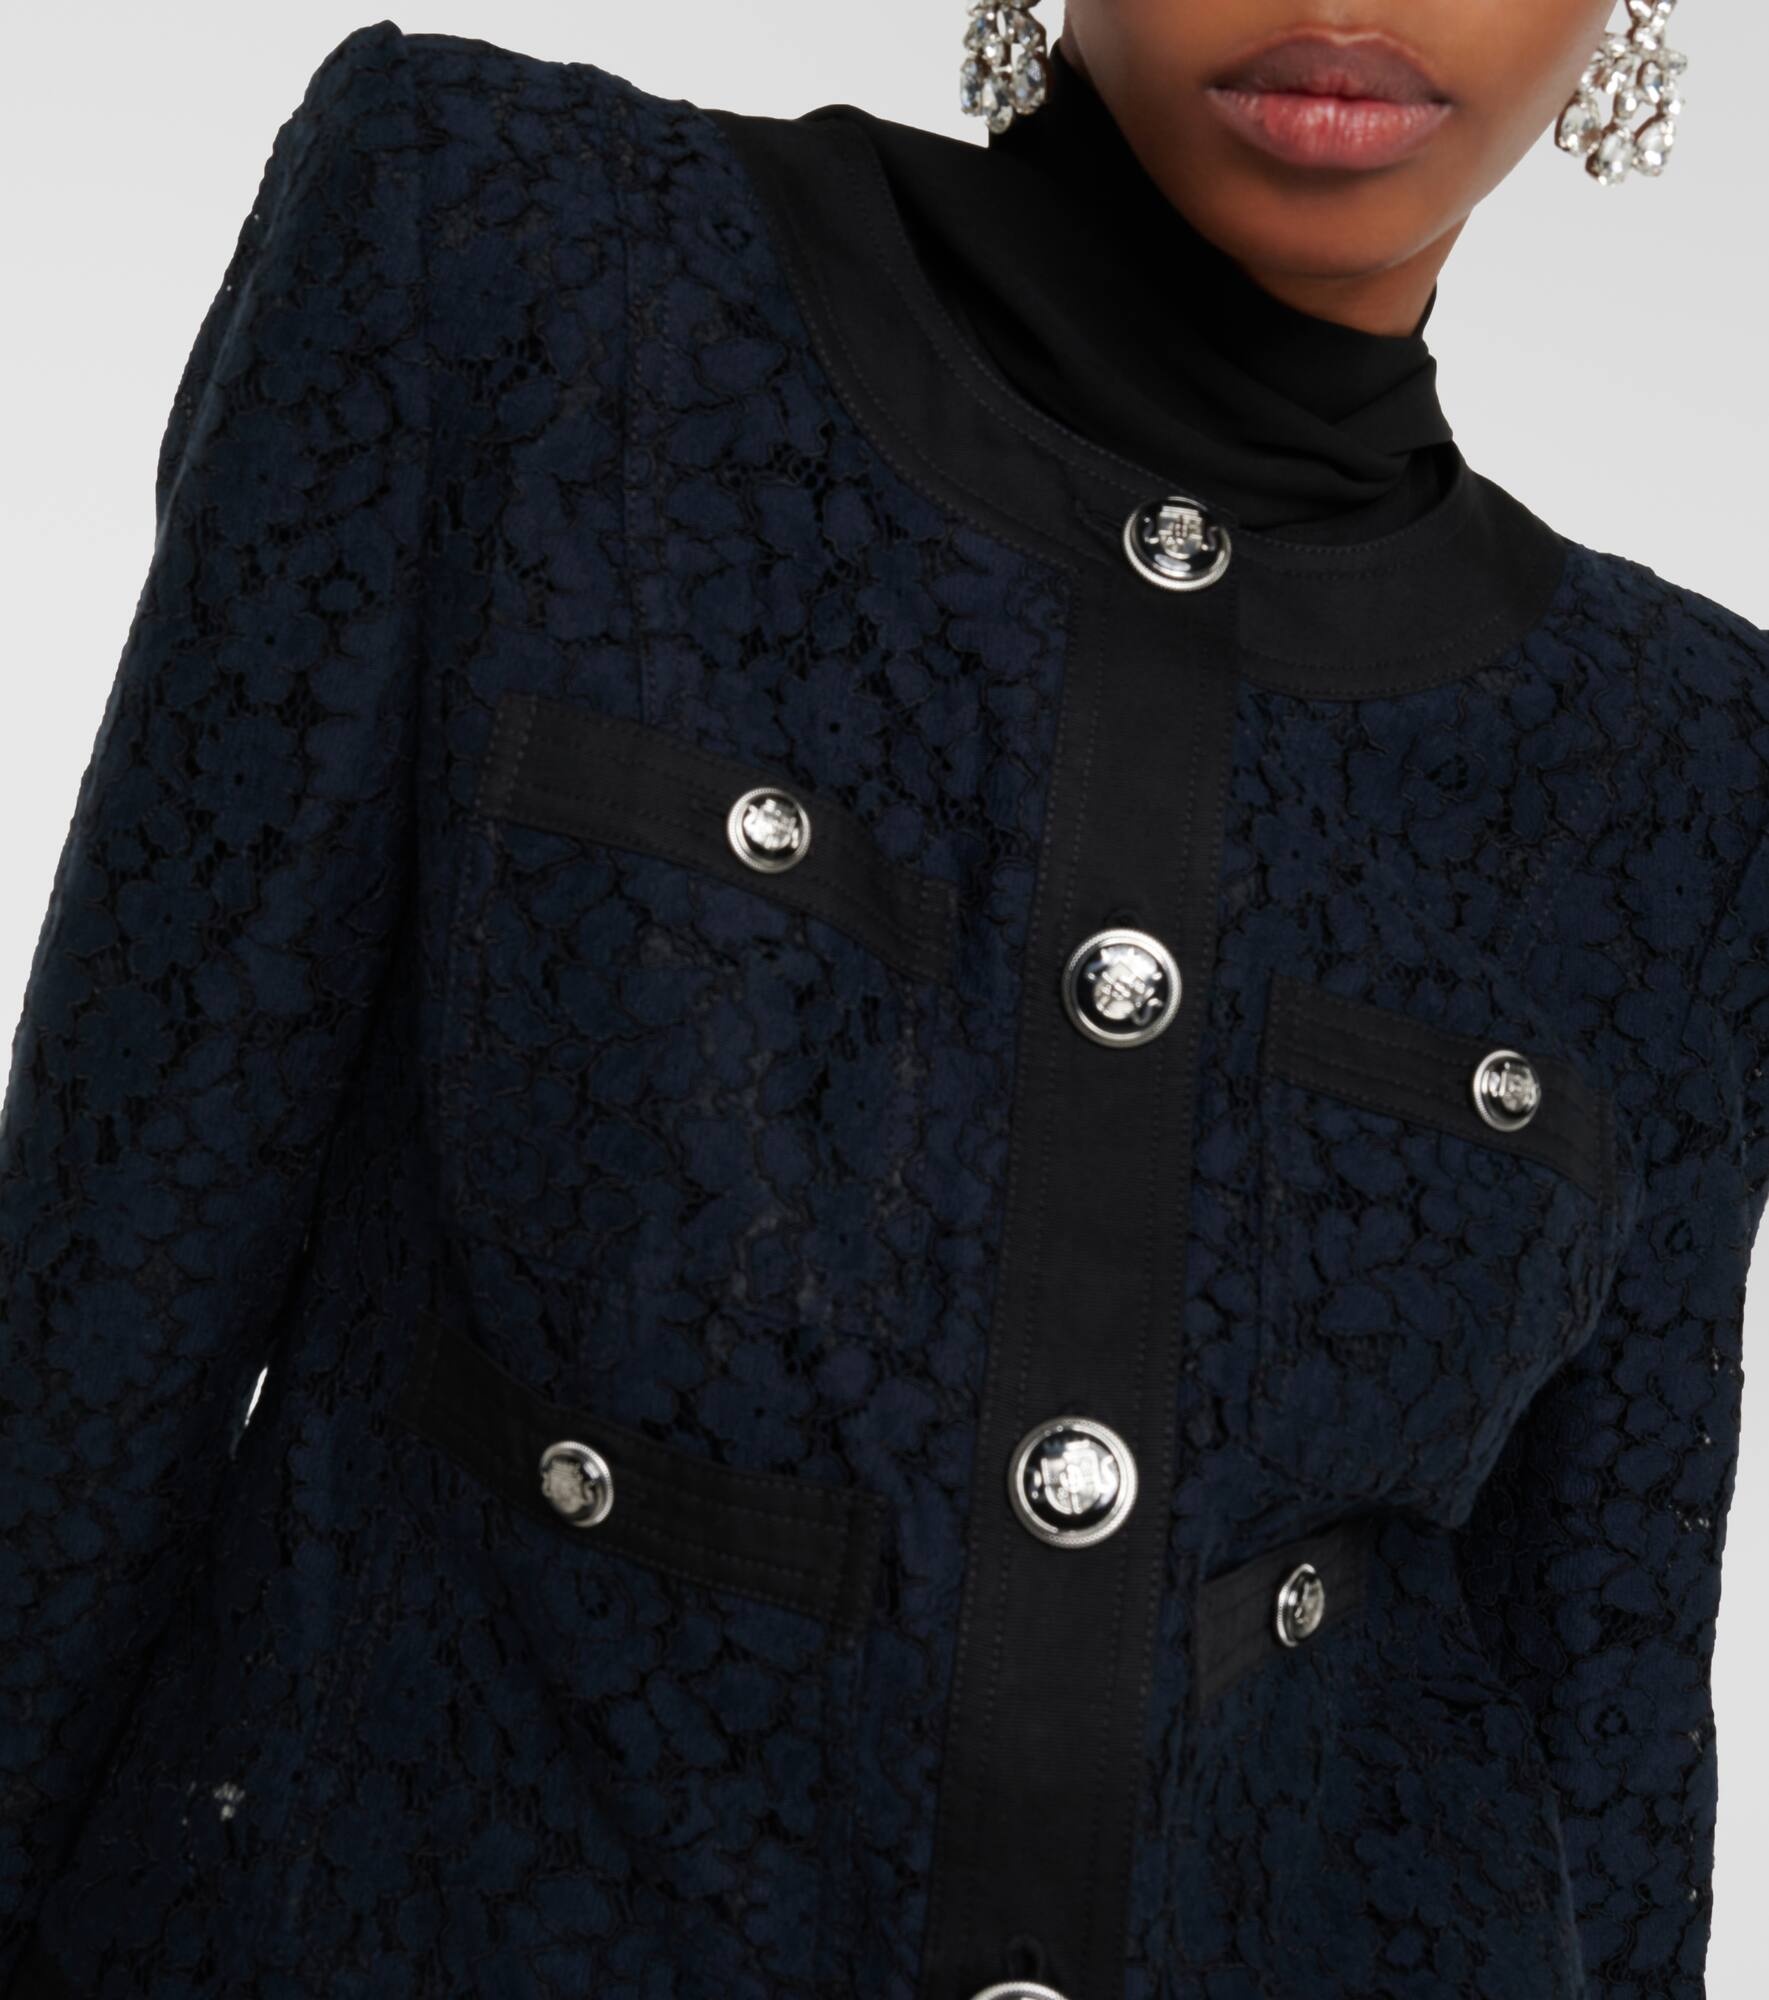 Ferazia lace jacket - 4